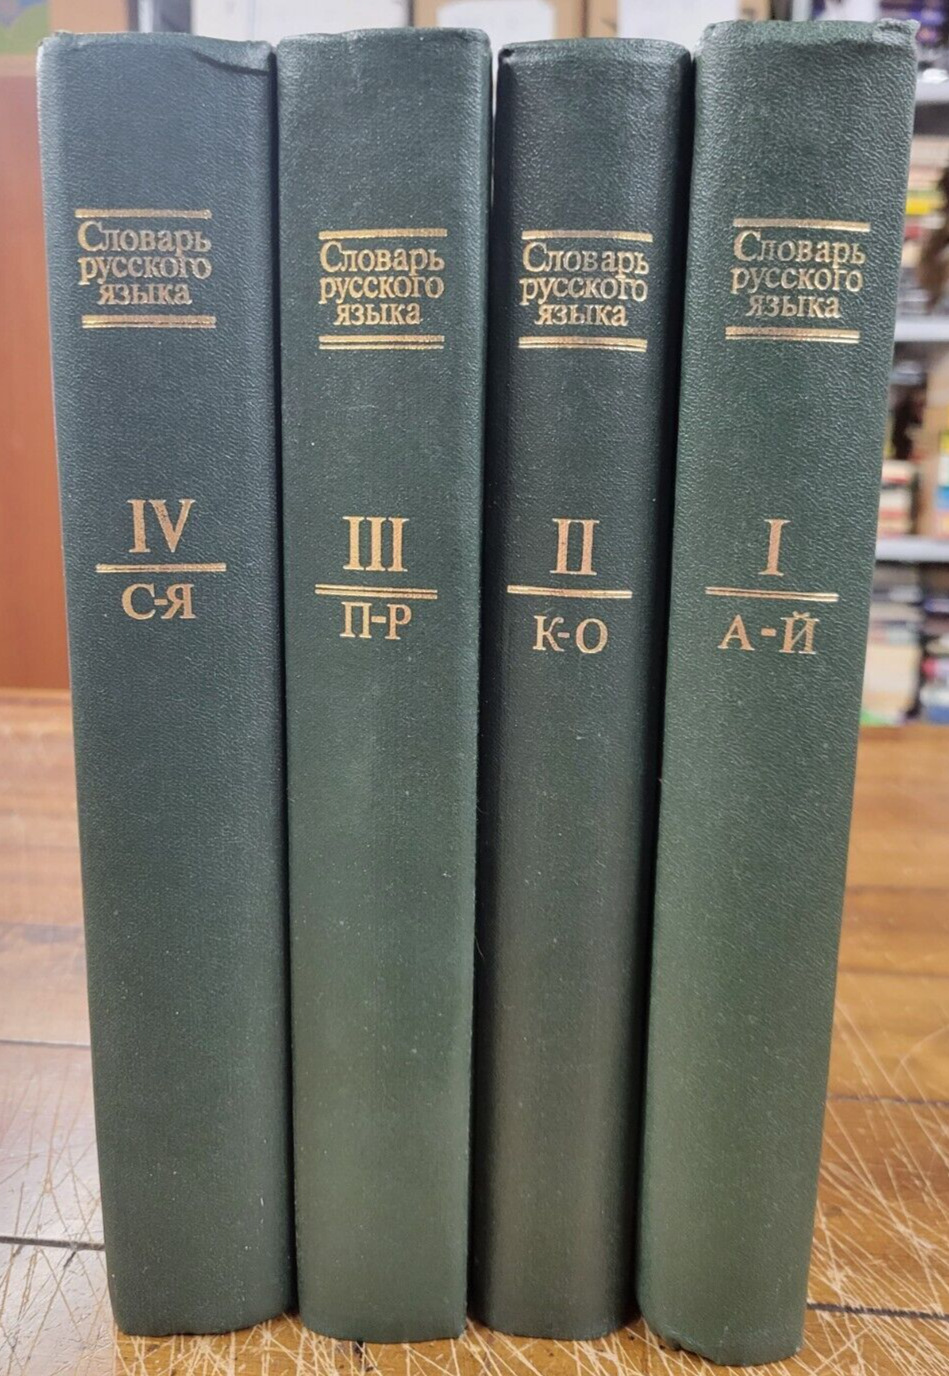 1981 Soviet CCCP 4 Volume Set Dictionary of Russian Language - Rare